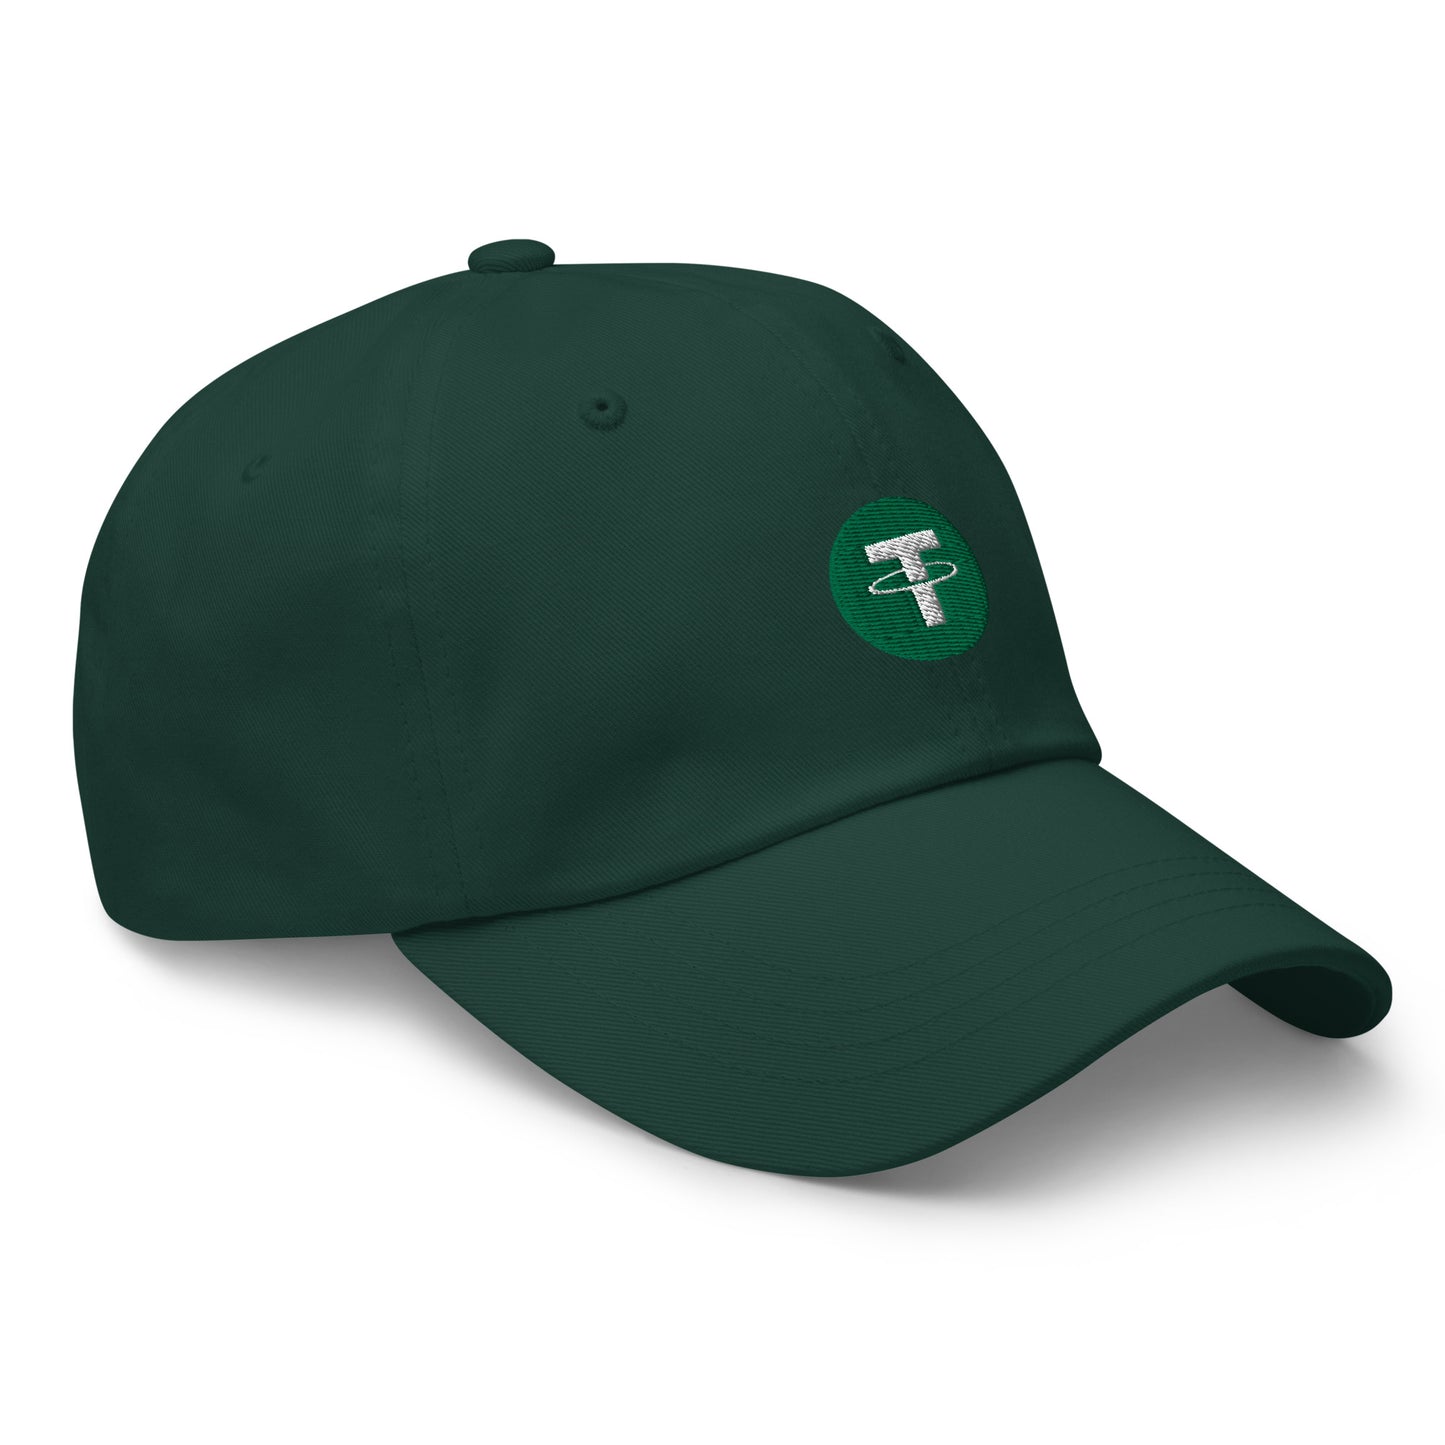 Tether (USDT) - Fitted baseball cap